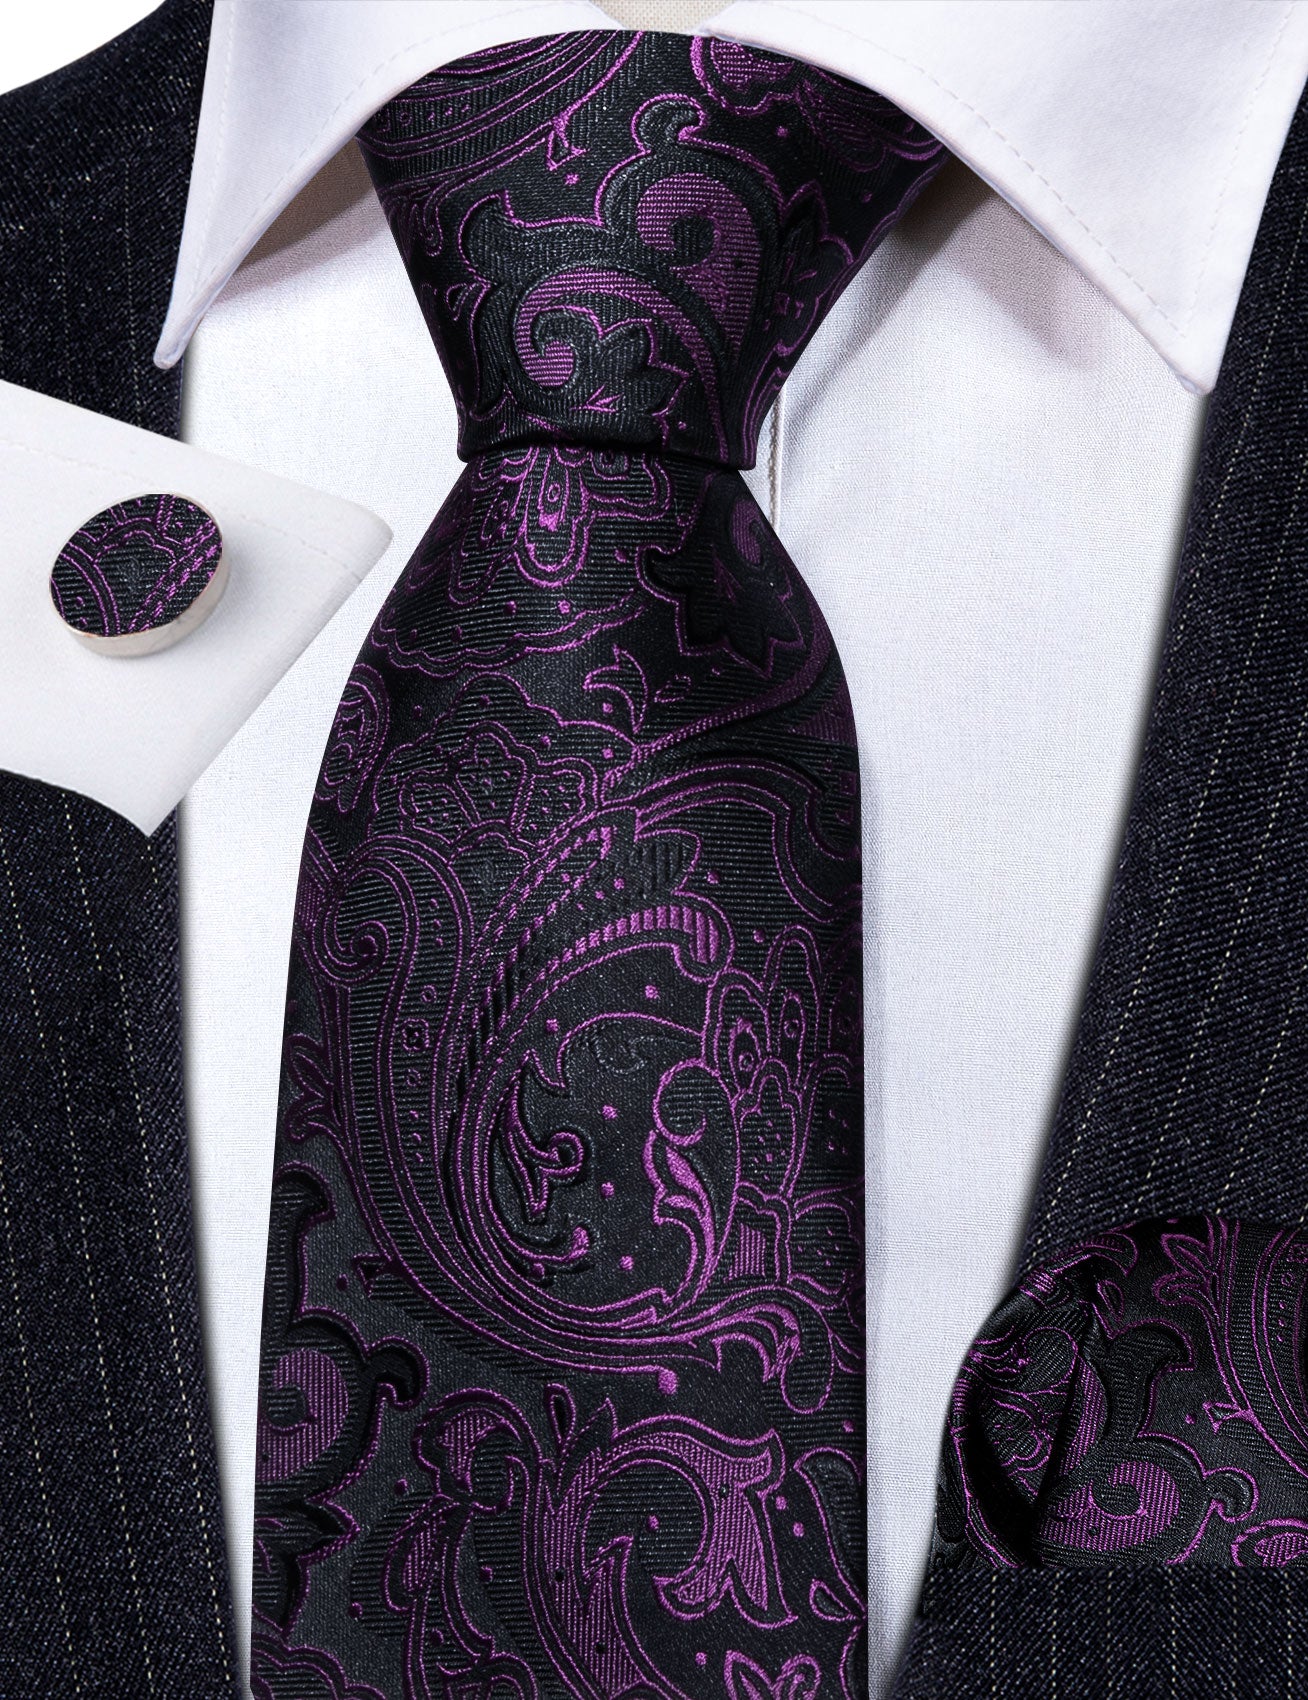 Purple Black Paisley Silk Tie Hanky Cufflinks Set